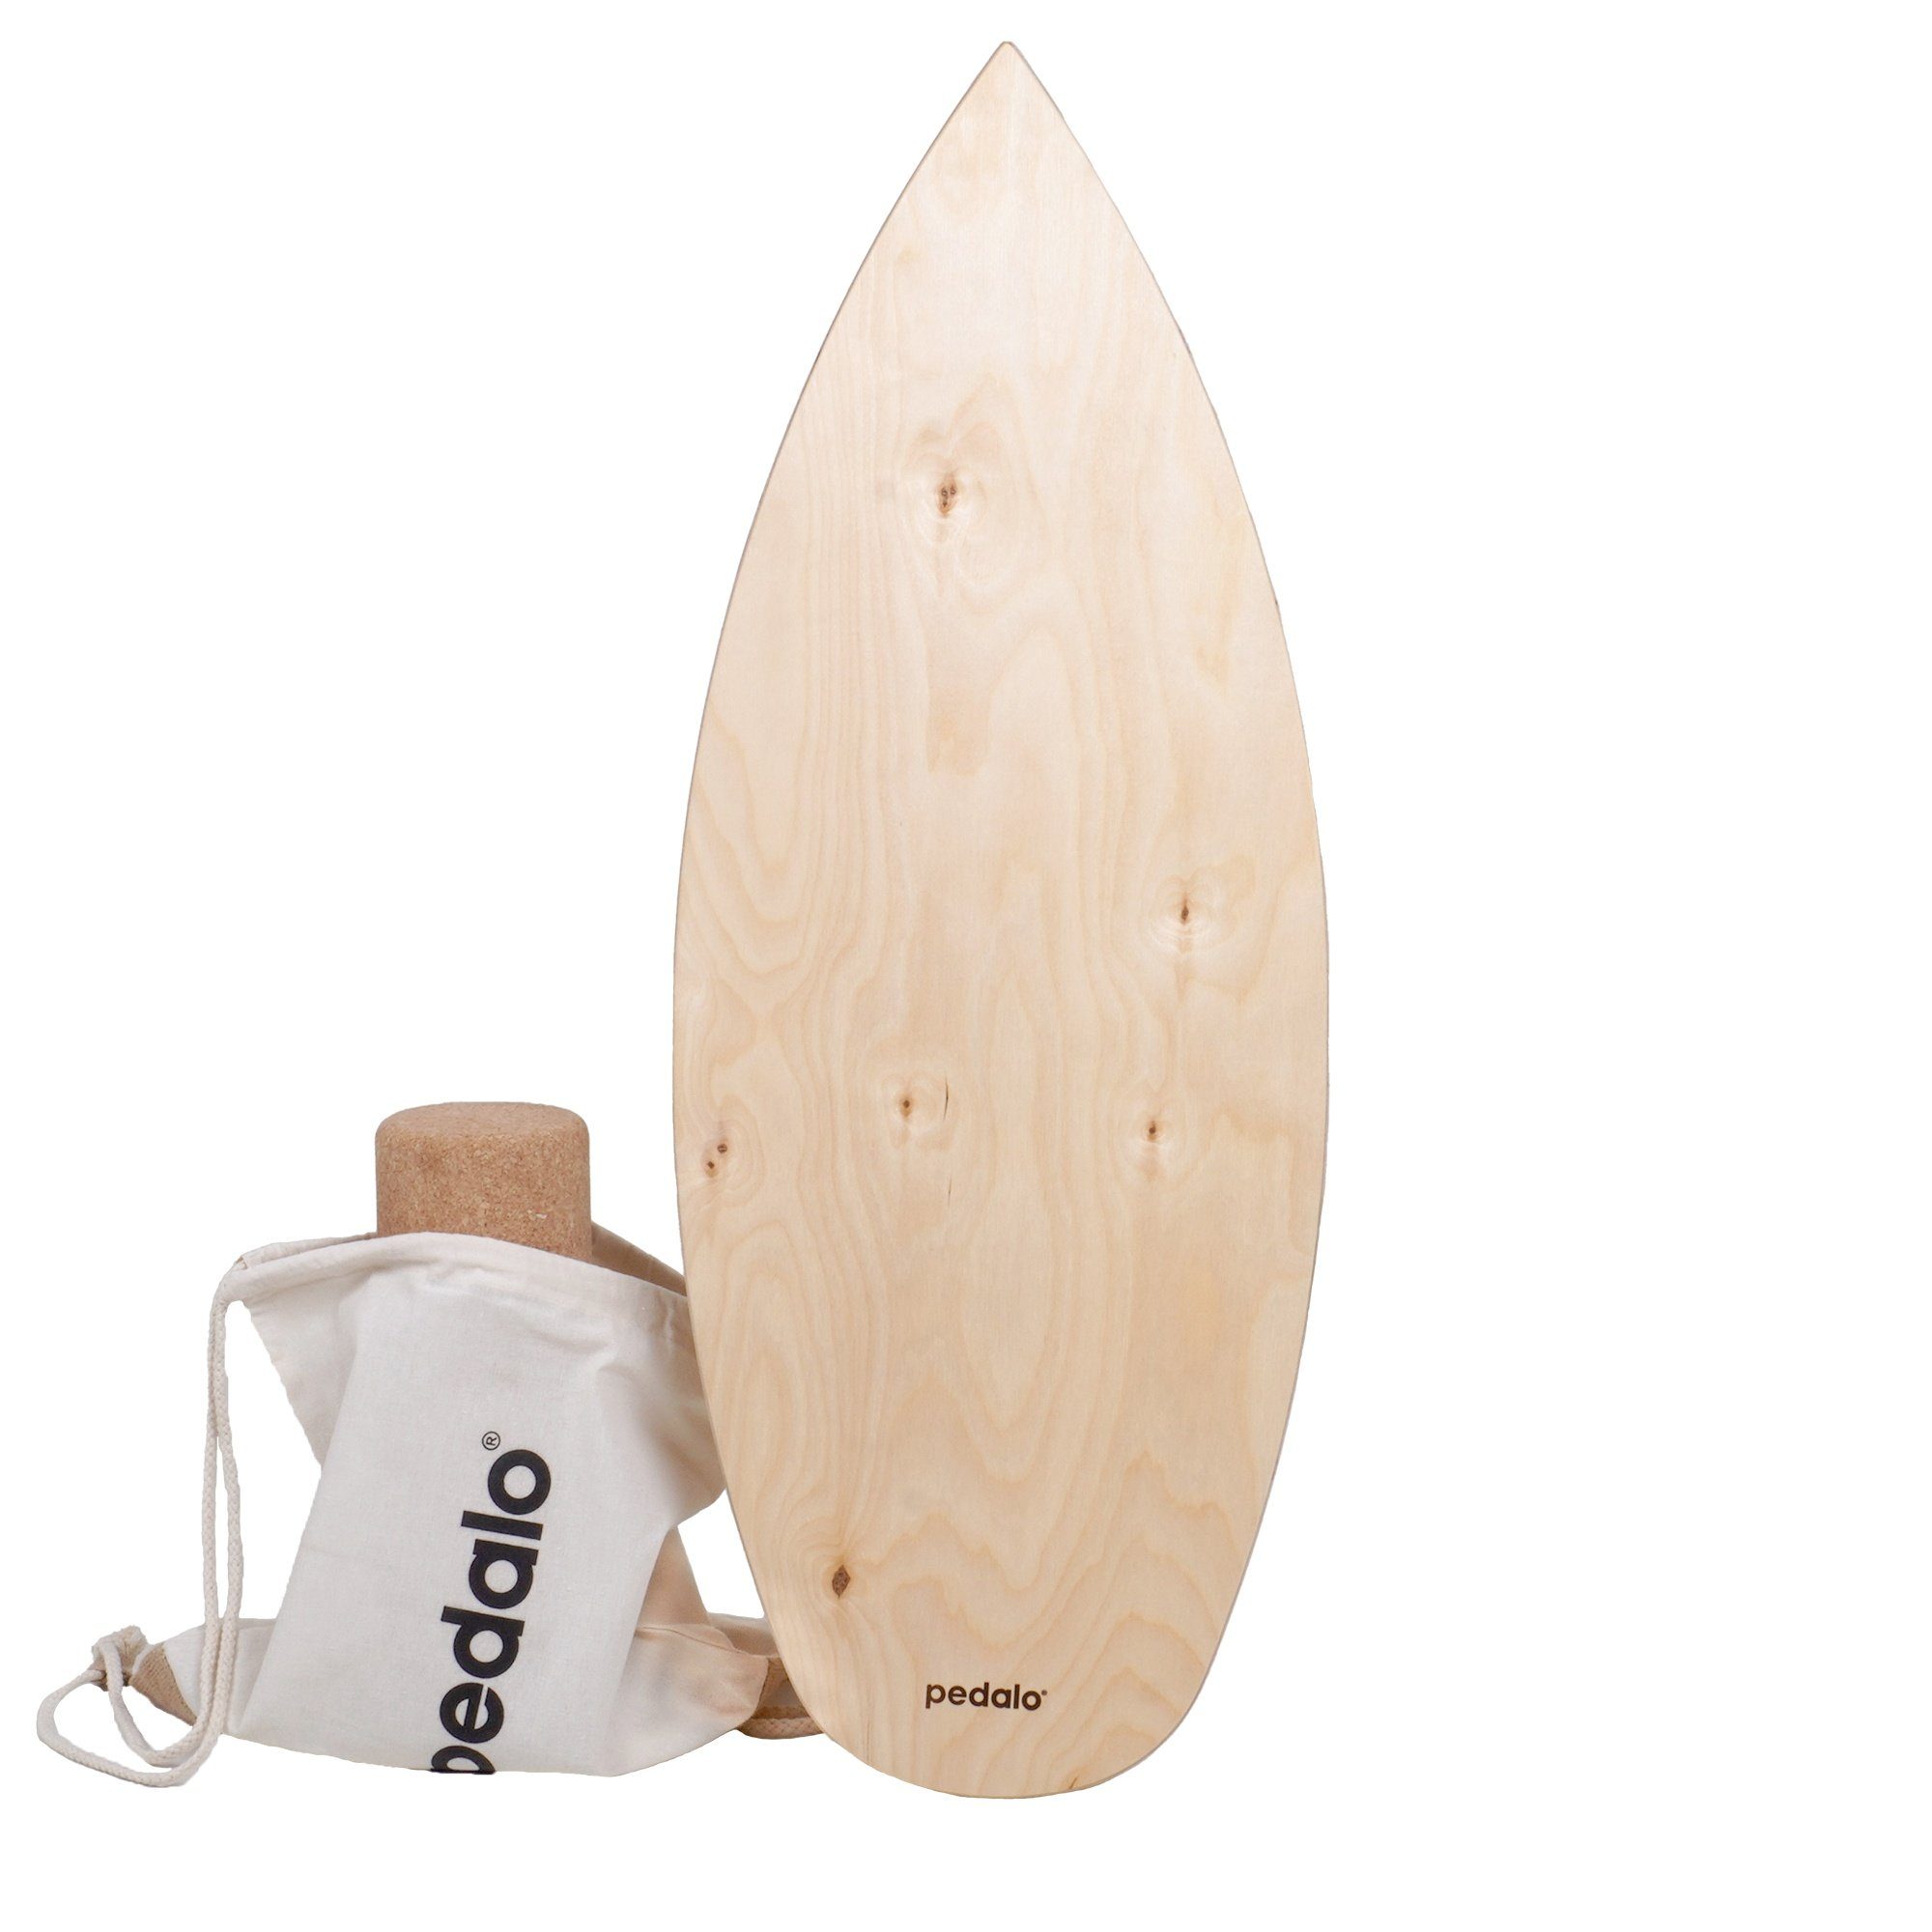 Oberfläche 10 Balanceboard Koordinationstrainer, Korkrolle pedalo® Holz Board Faszien Balance inkl. Pur cm, Board stabil, Gleichgewichtstrainer